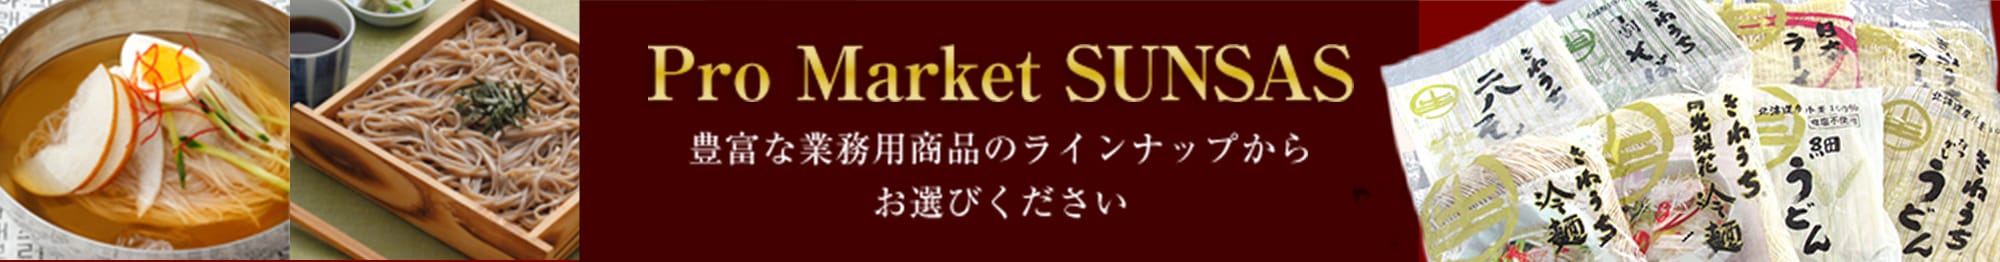 Pro Market Sunsas 豊富な業務用商品のラインナップからお選びください